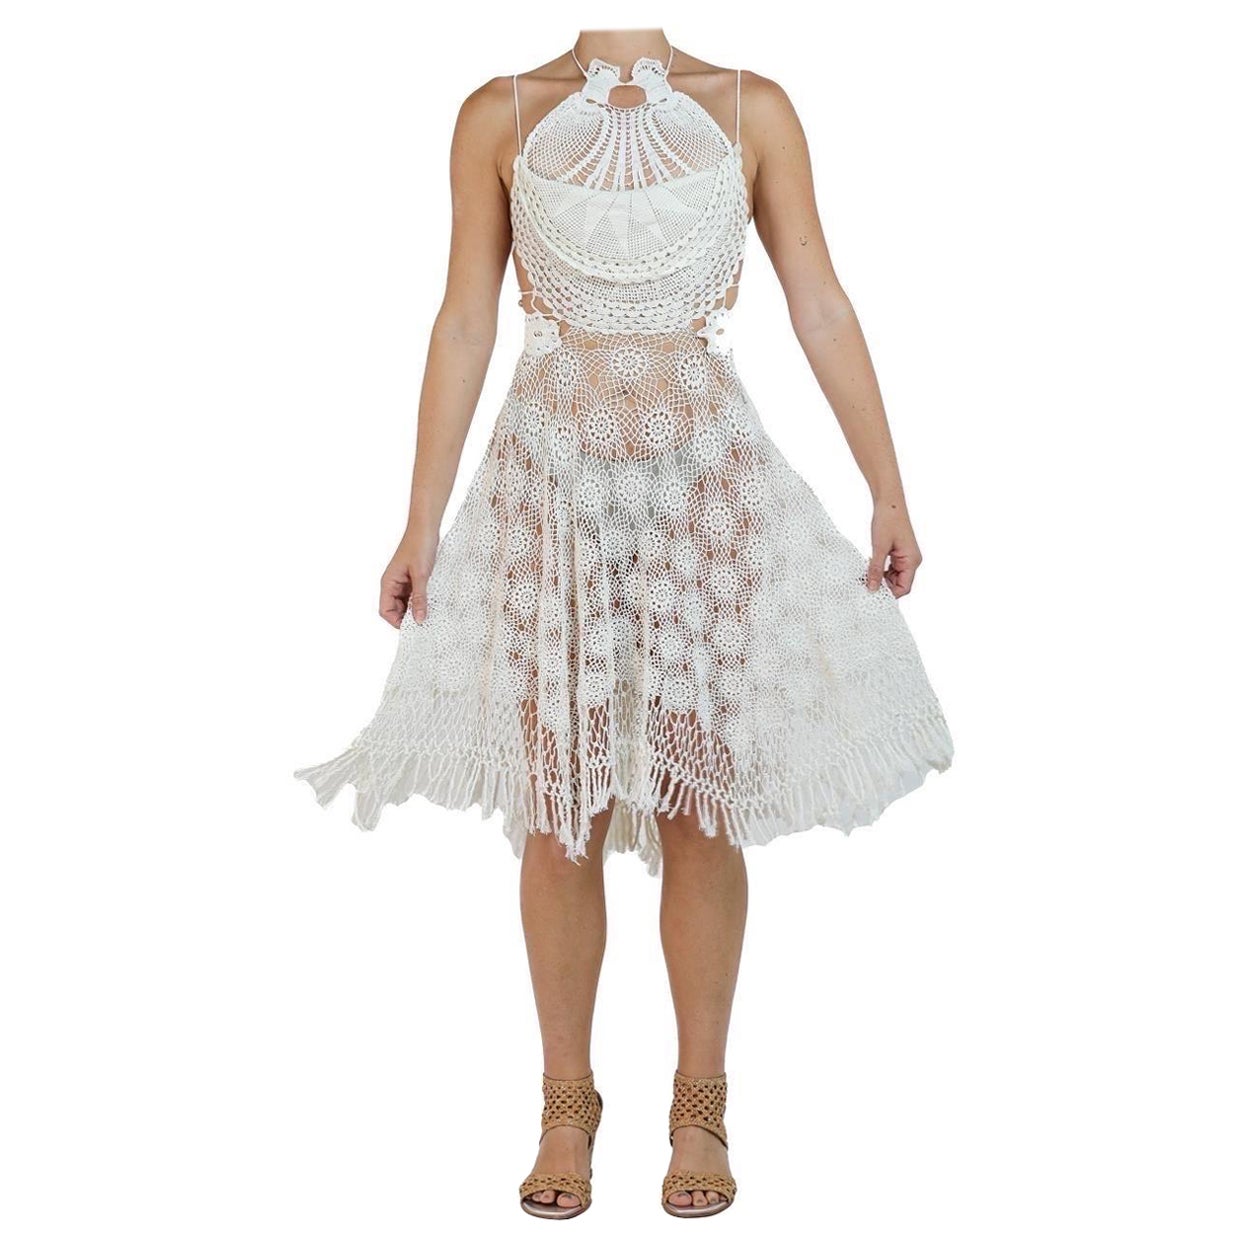 Morphew Collection White Cotton Crochet Lace Mini Dress Master For Sale